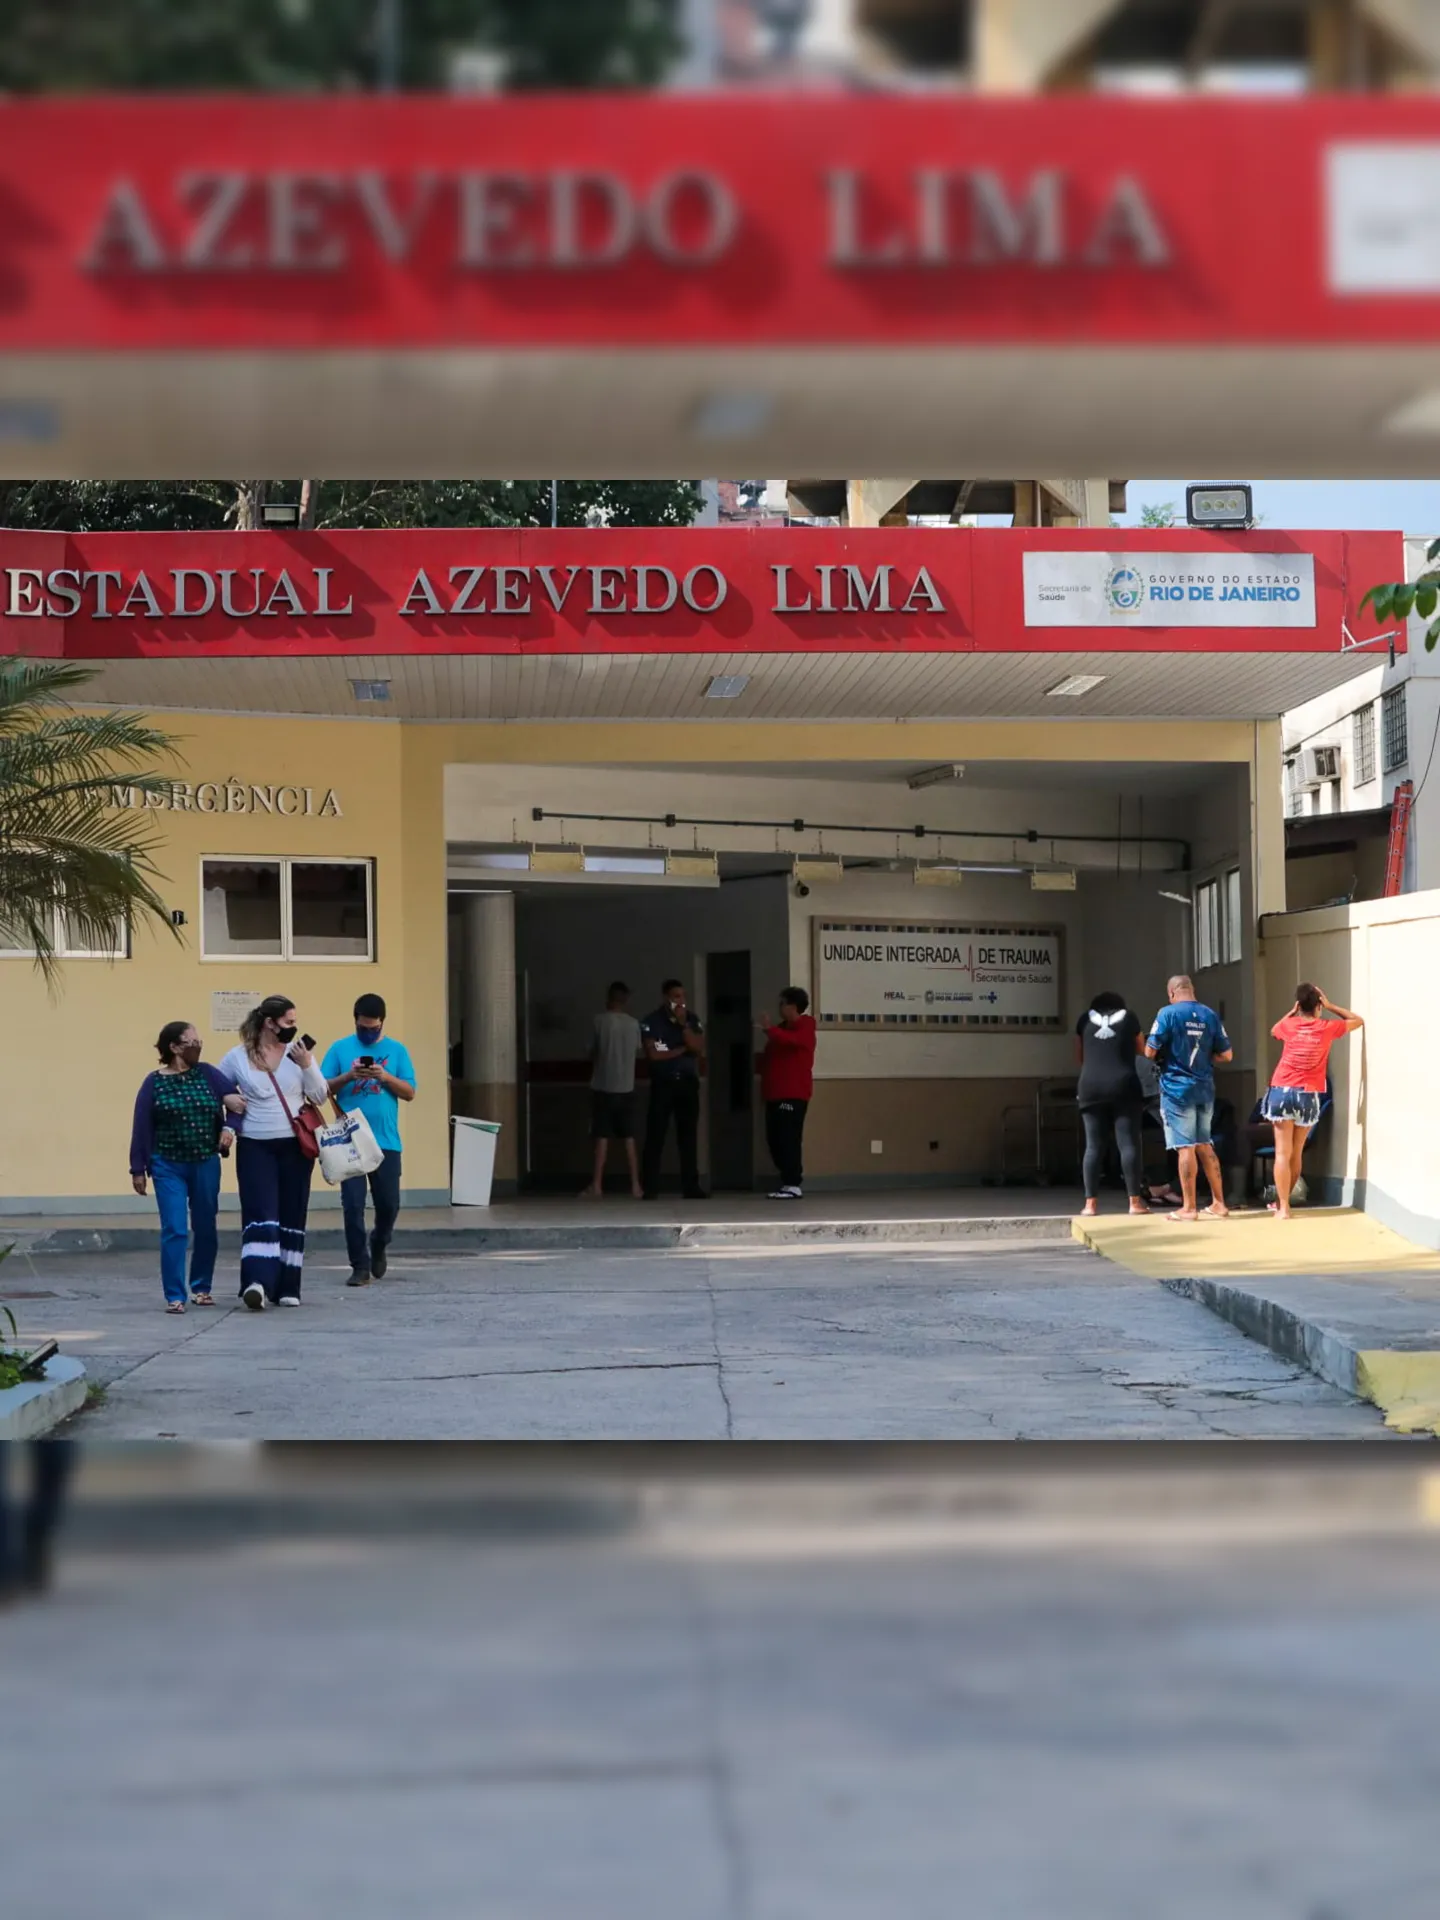 Fachada Hospital Estadual Azevedo Lima Niterói